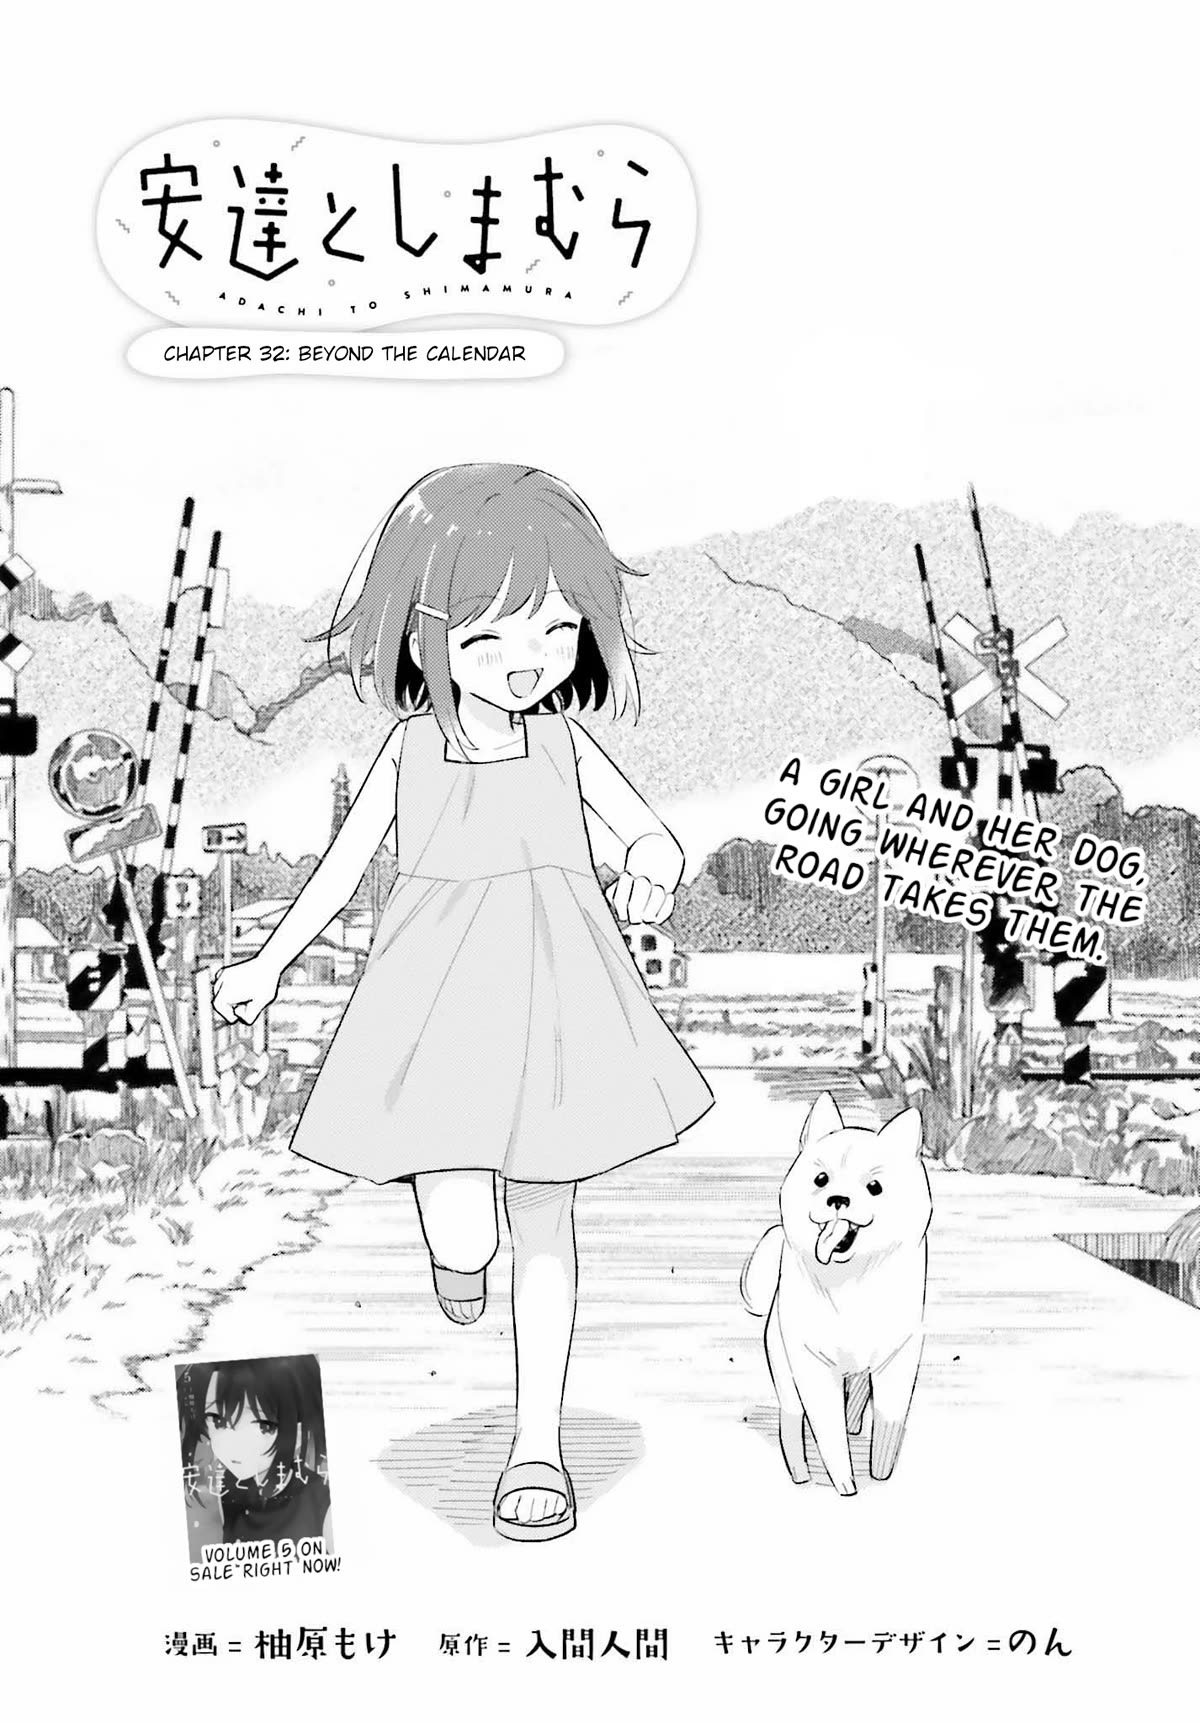 Read Adachi to Shimamura Manga Chapter 8 in English Free Online